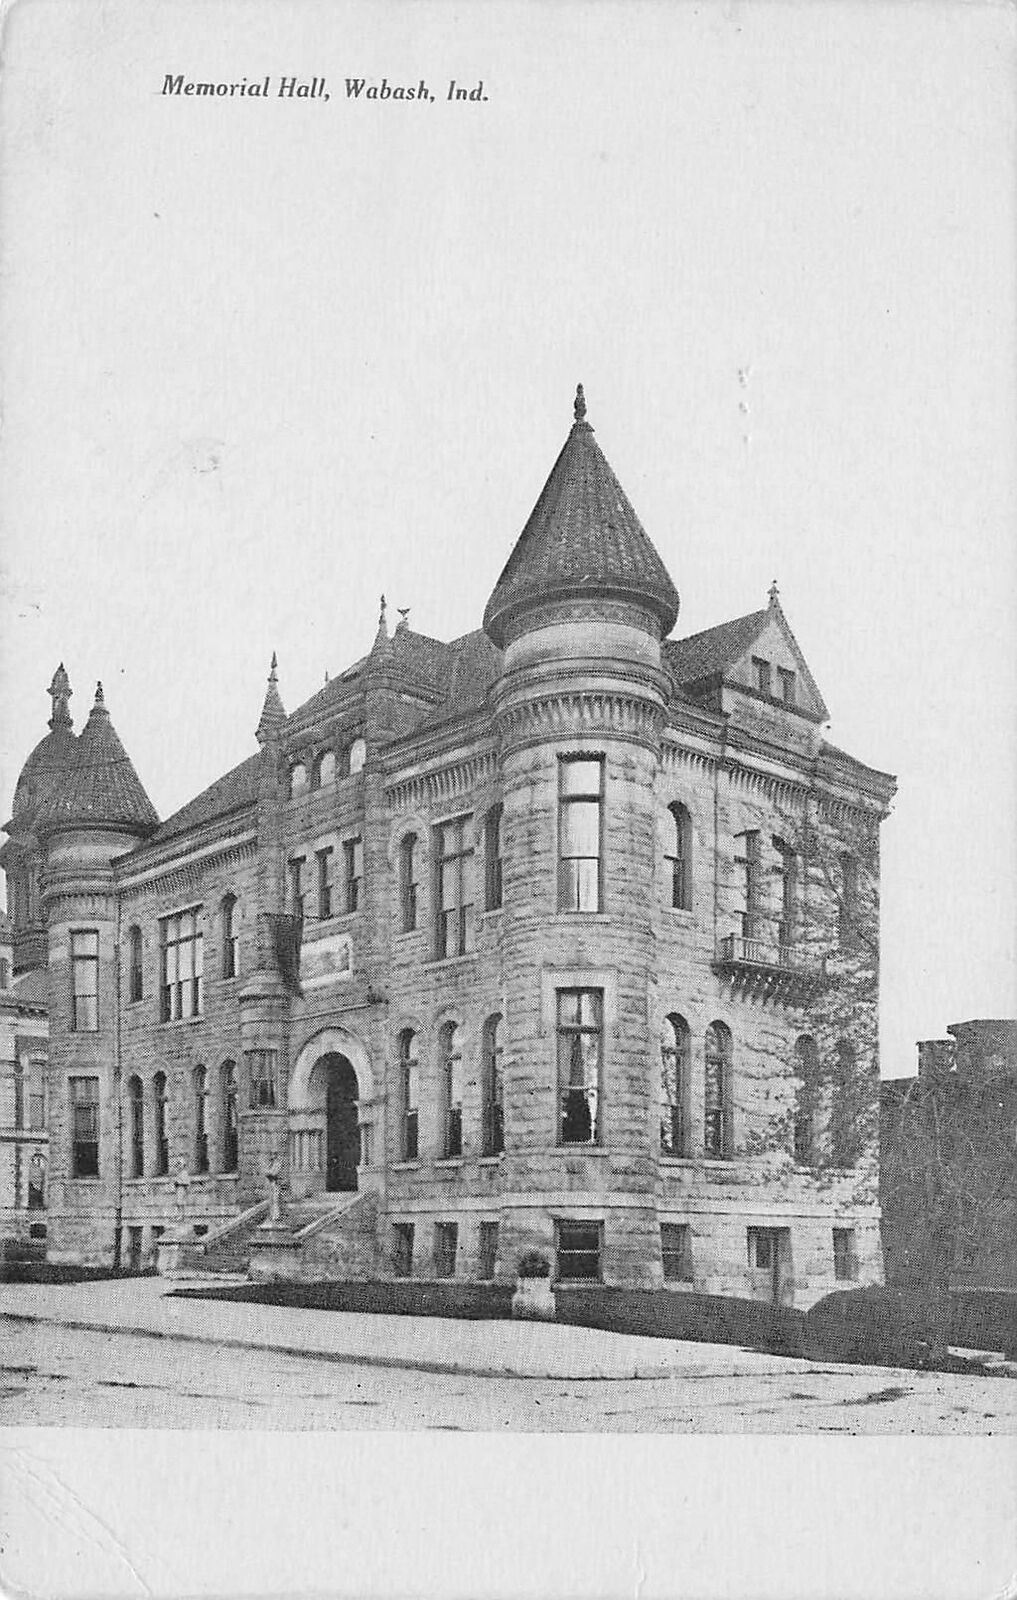 Vintage Postcard Memorial Hall Wabash Indiana exterior photo architecture